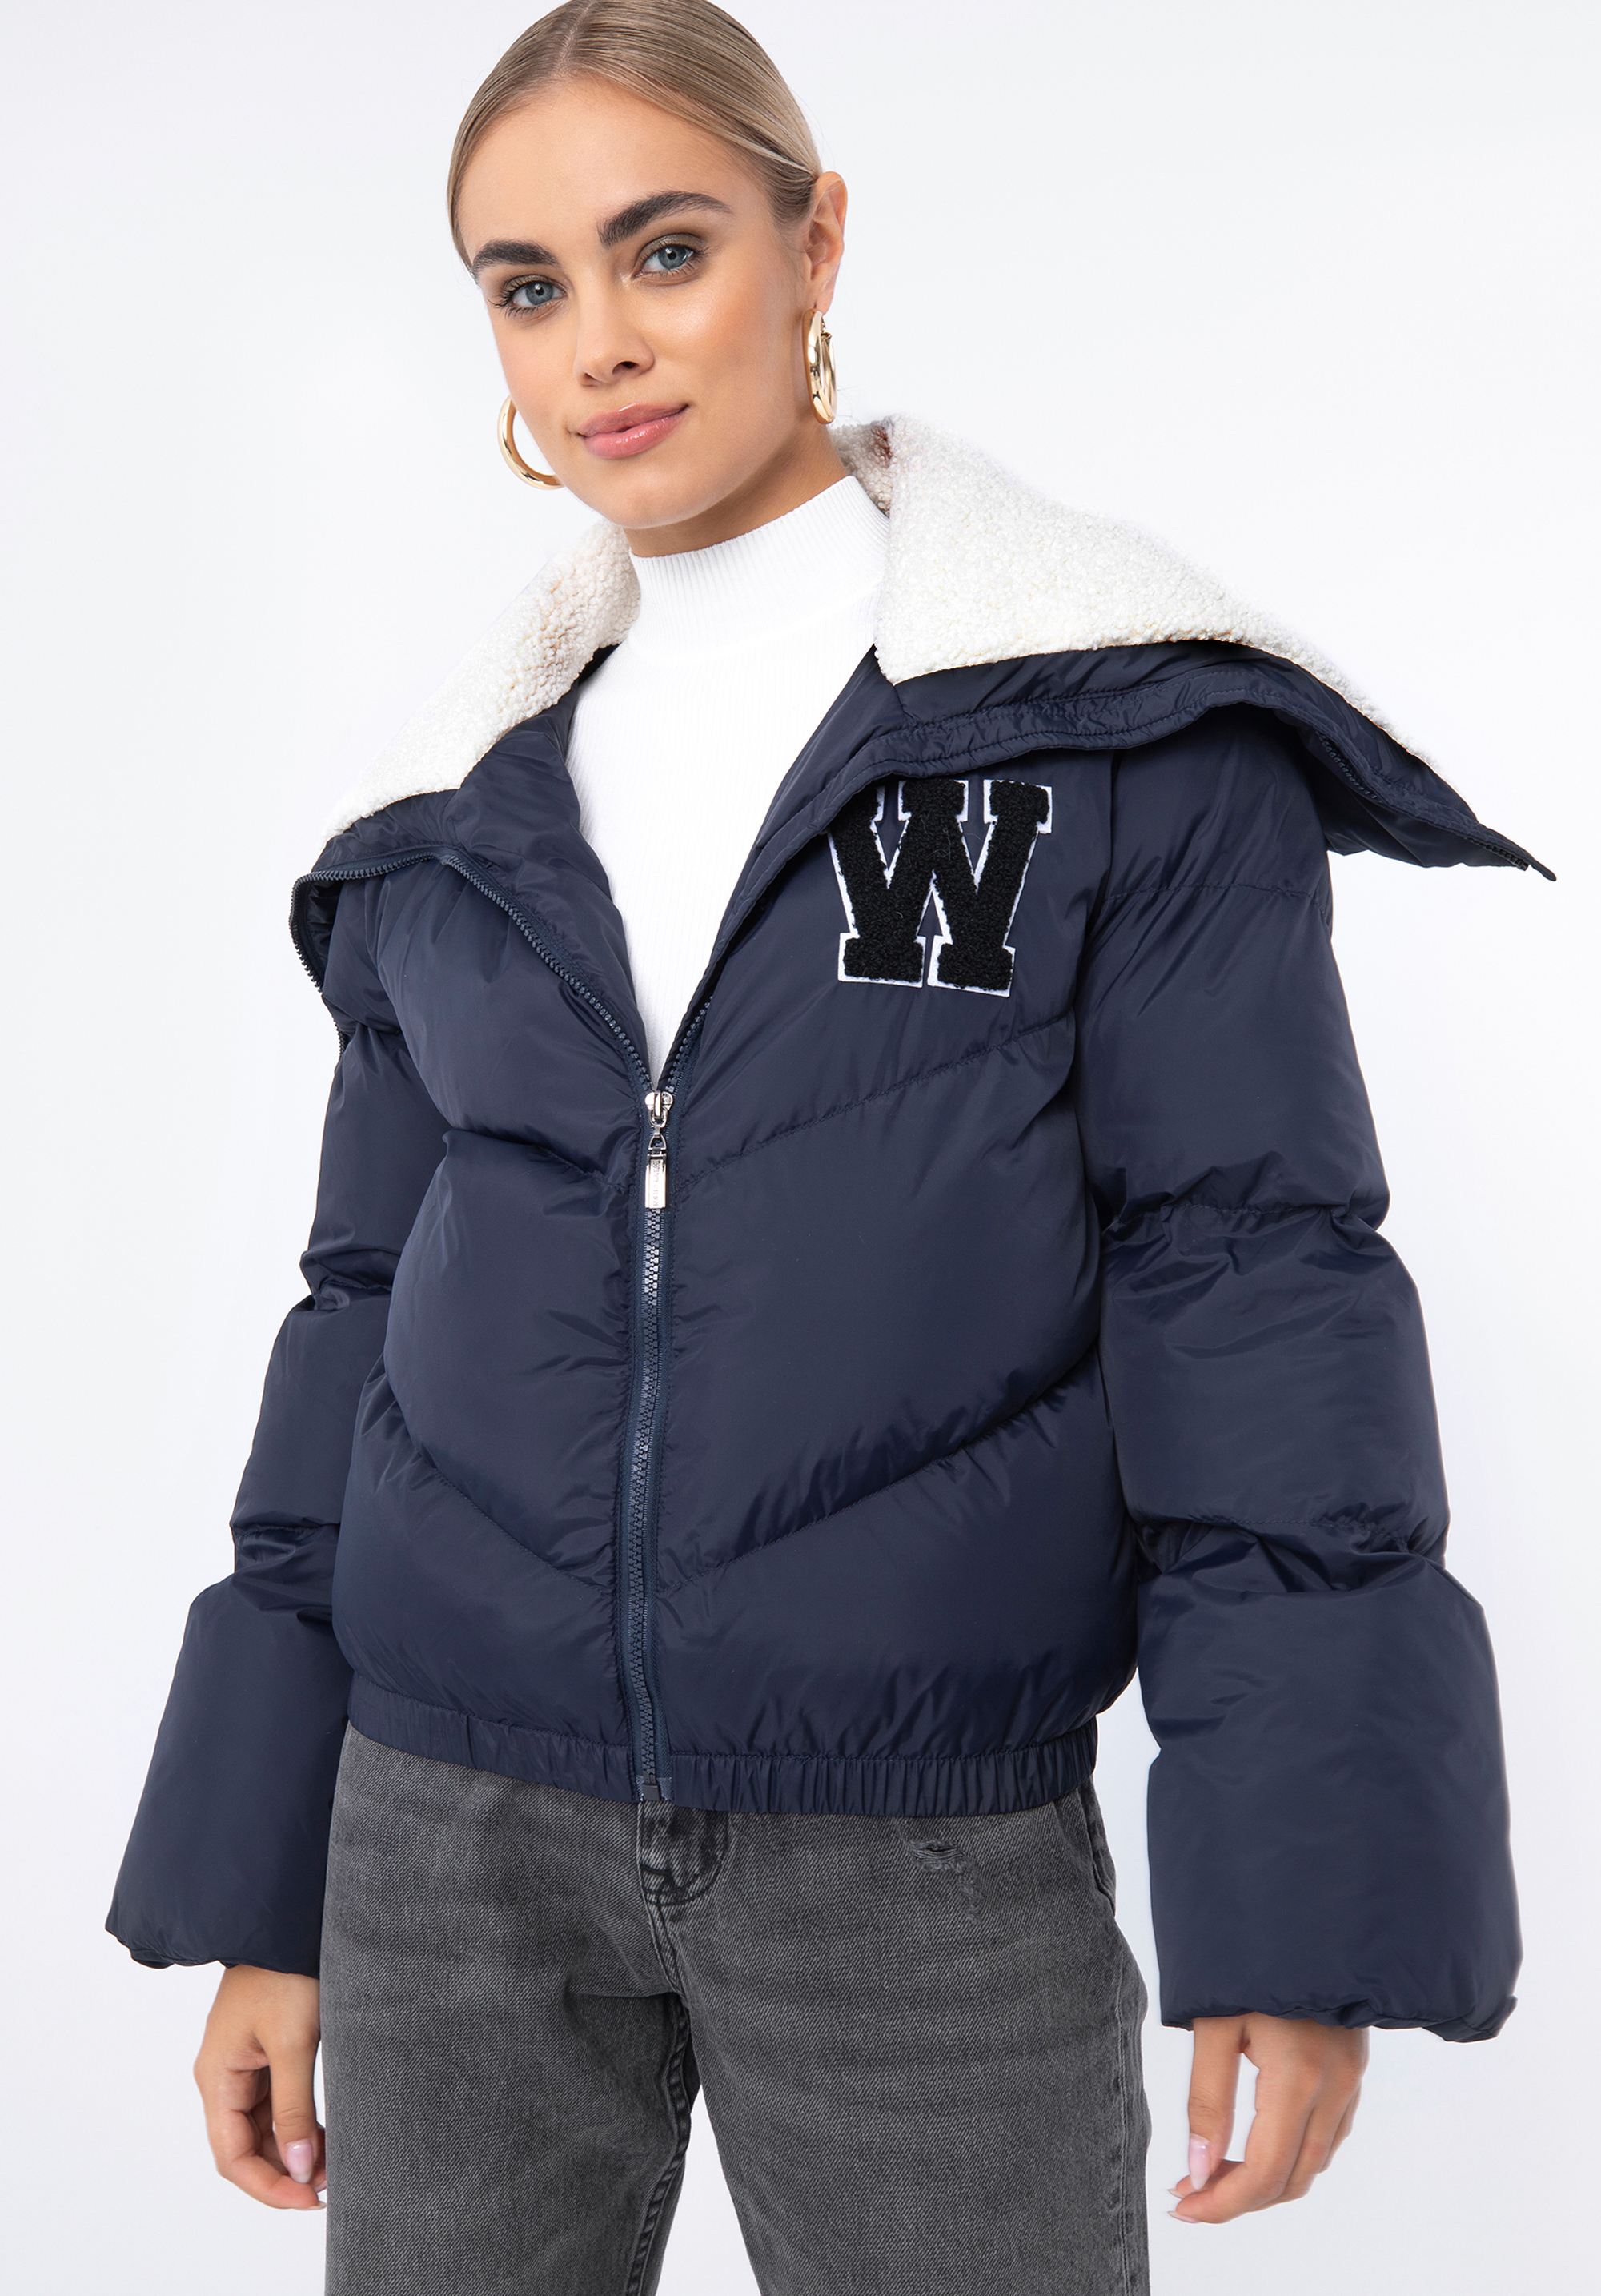 Кожаная куртка Wittchen Polyester jacket, темно синий